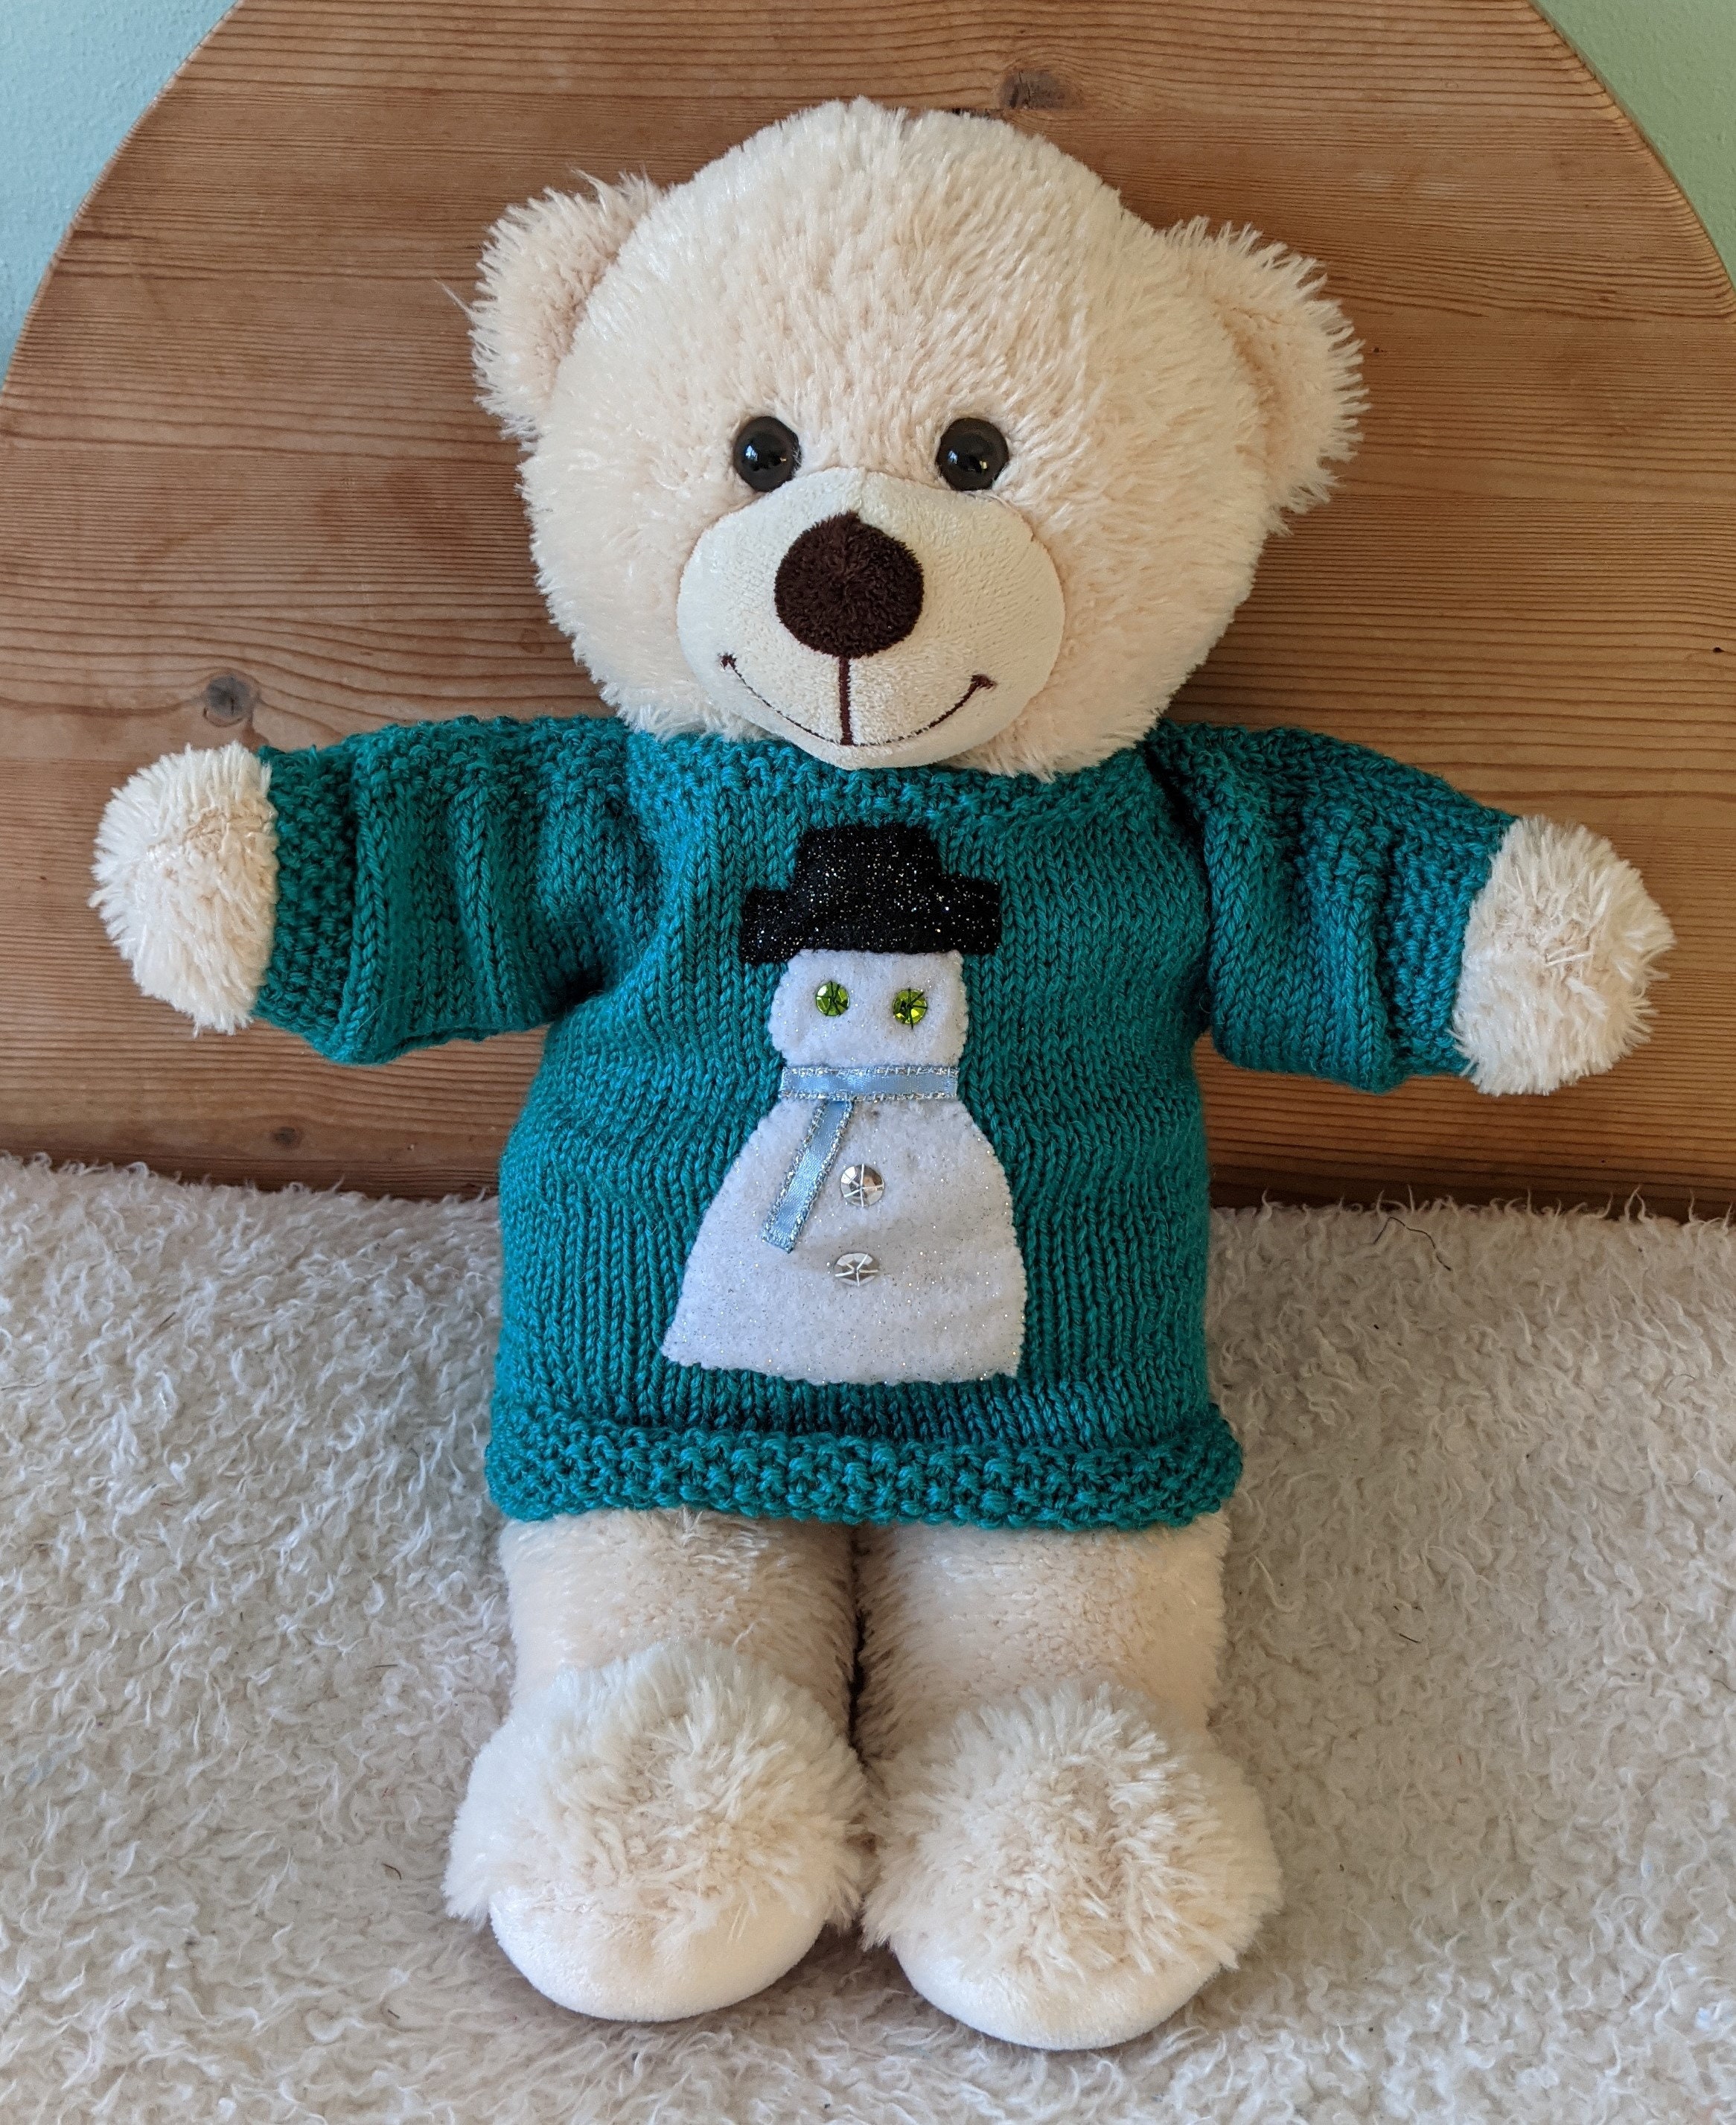 Handknitted green woollen jumper/sweater for Build a bear with felt  Christmas Snowman design and sequin / ribbon details